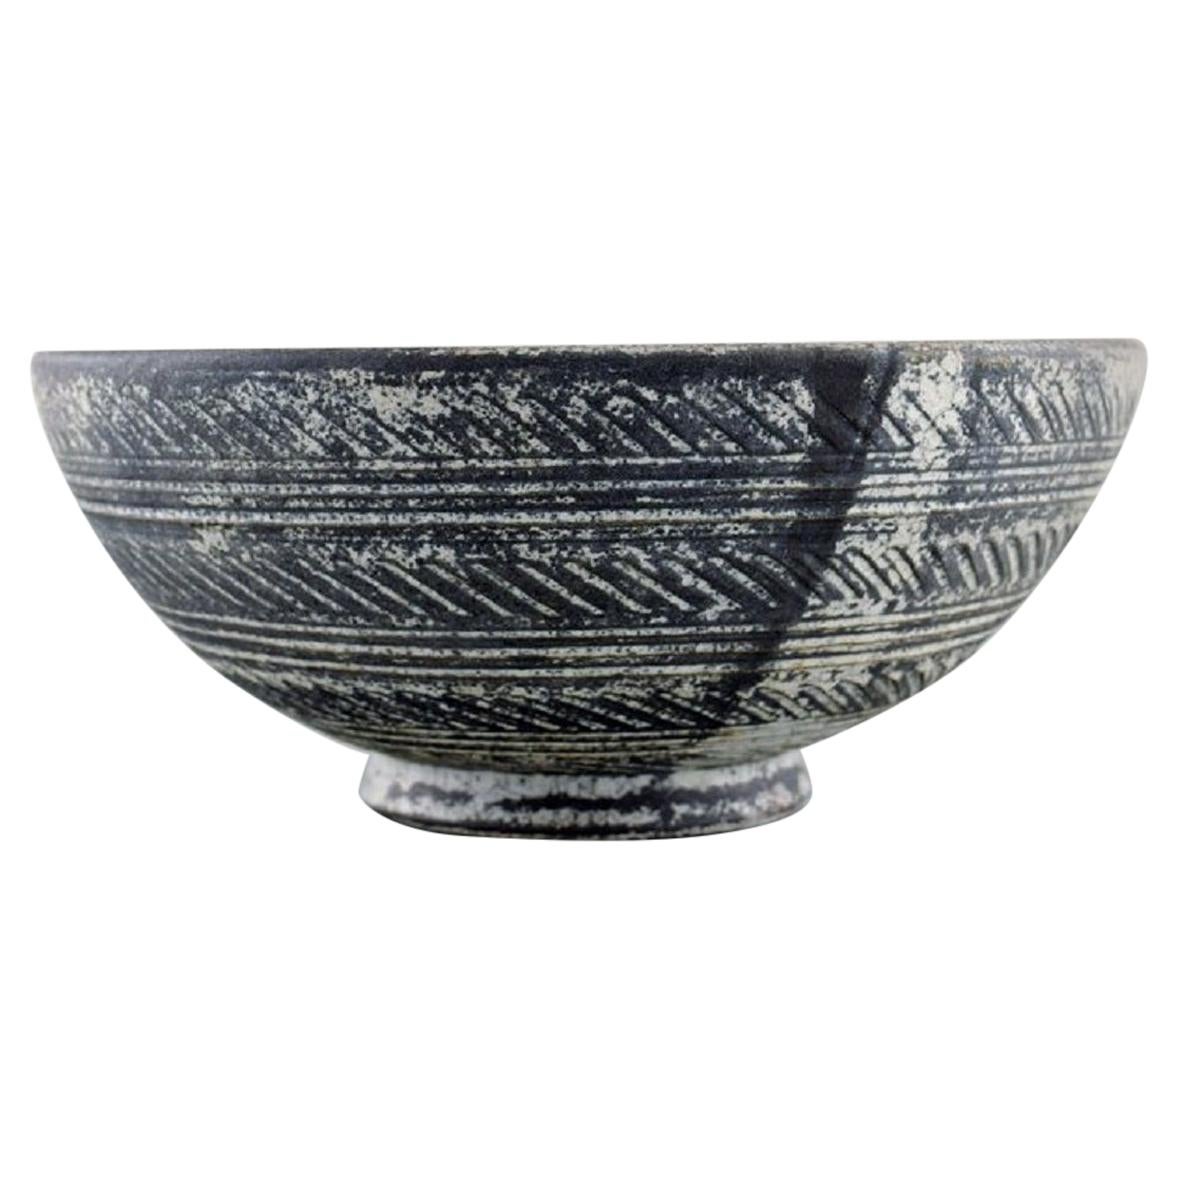 Kähler, Denmark, Bowl in Glazed Stoneware, Beautiful Gray-Black Double Glaze